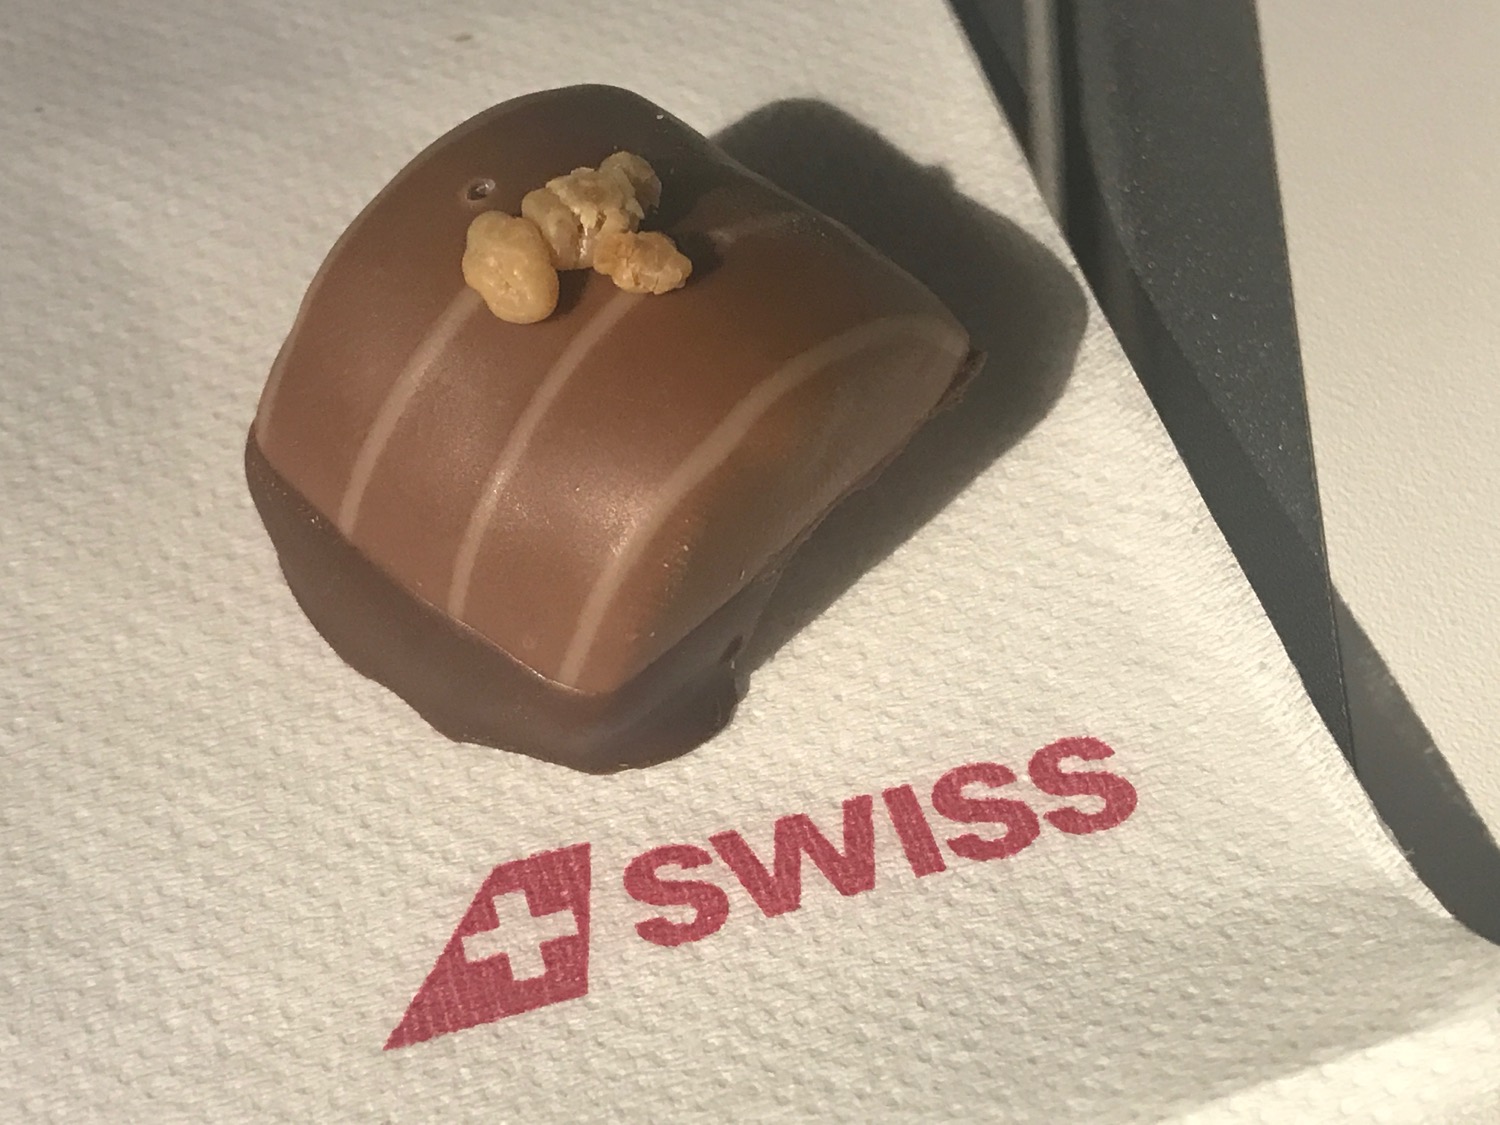 a chocolate candy on a napkin